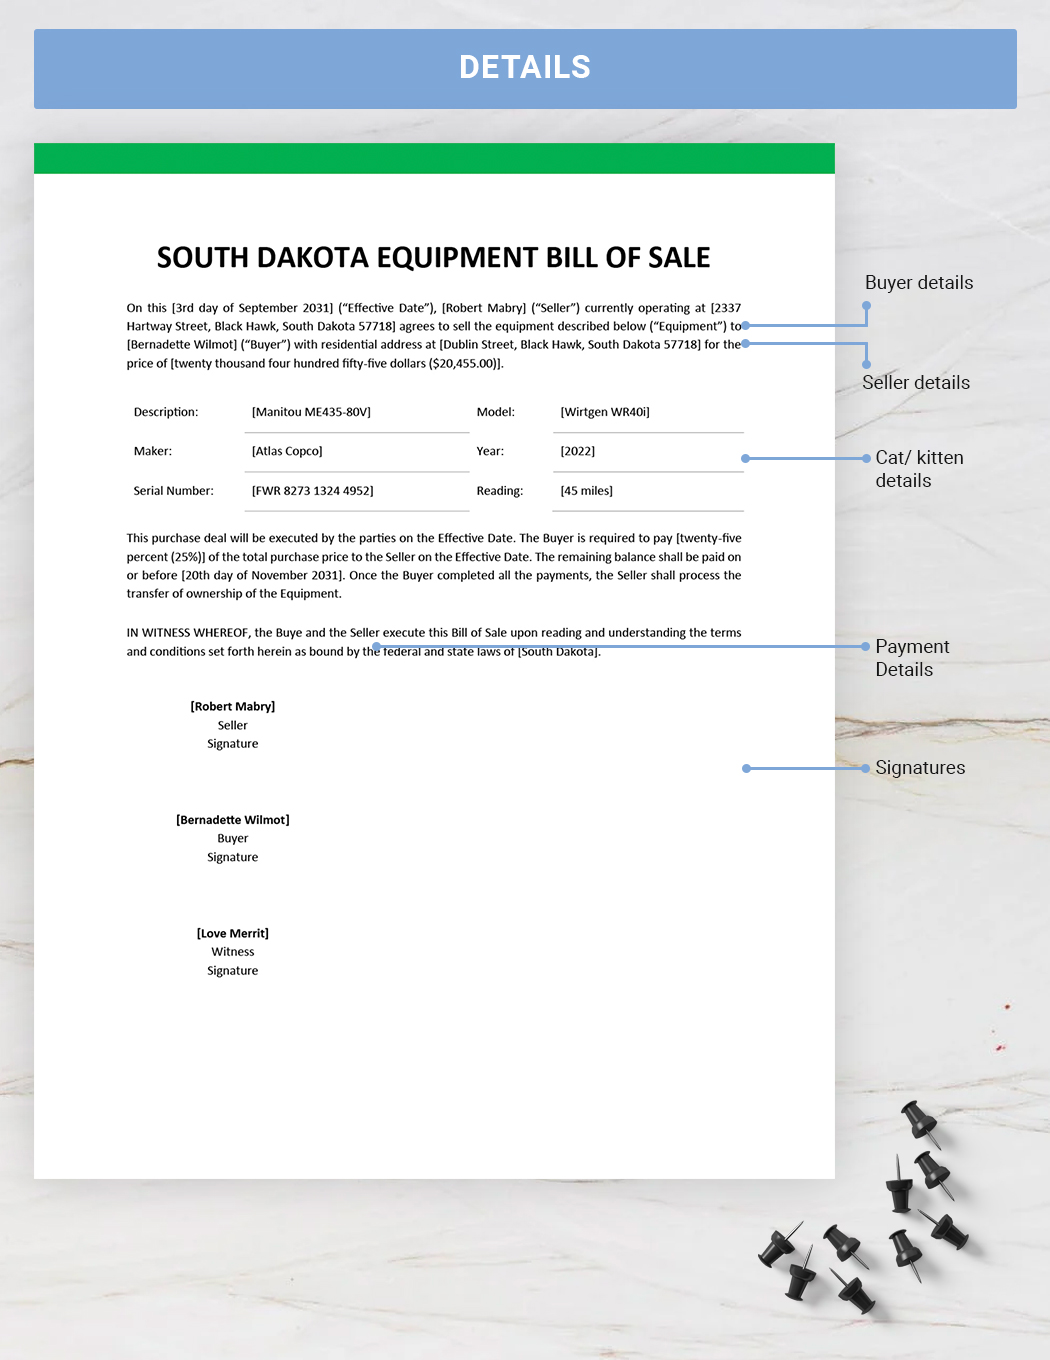 South Dakota Equipment Bill of Sale Template